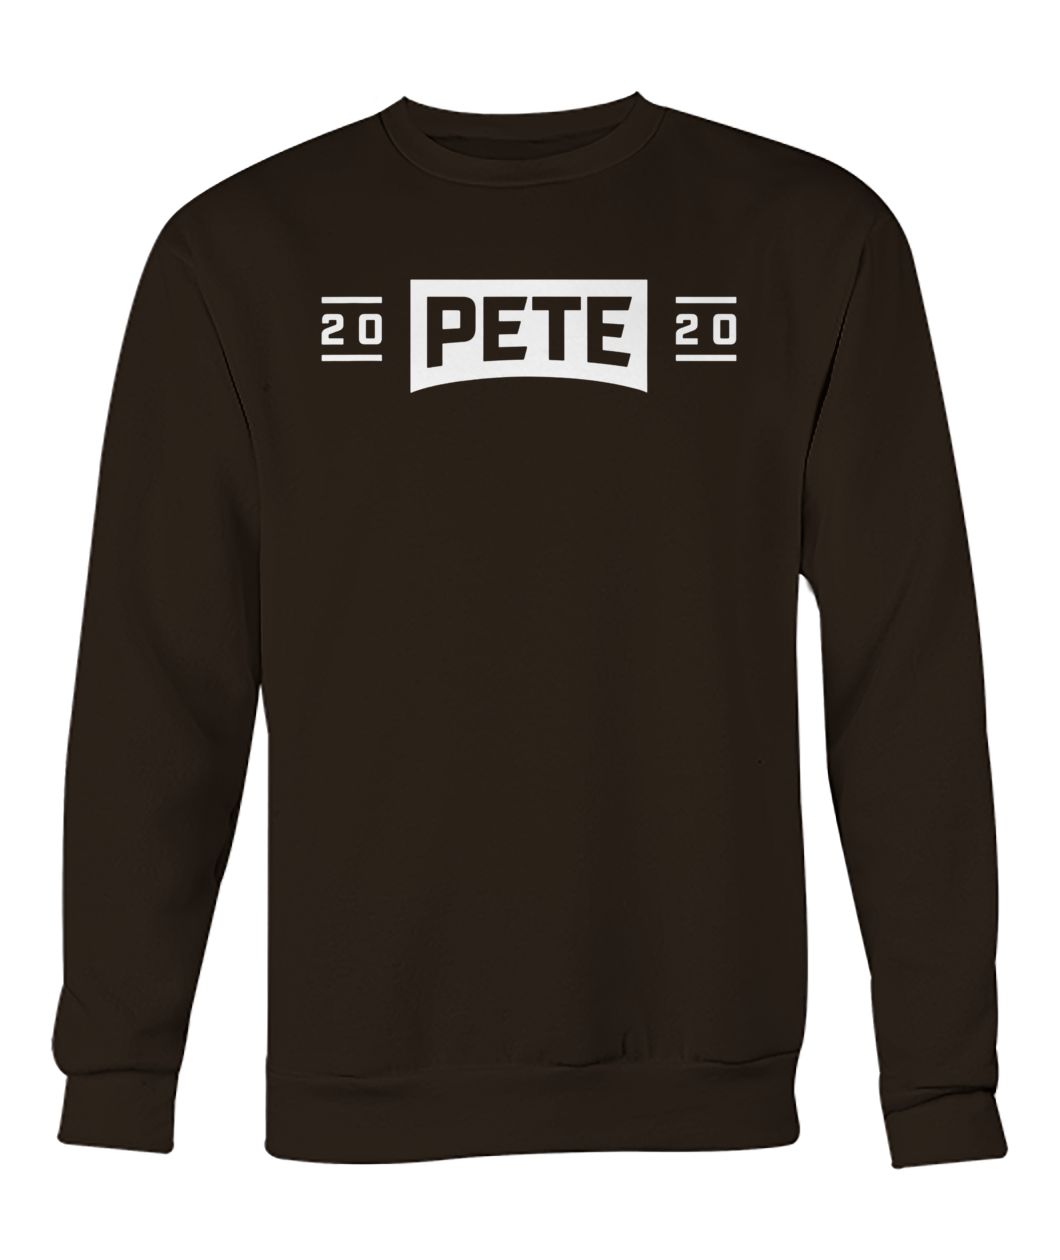 Pete buttigieg for president 2020 election crew neck sweatshirt